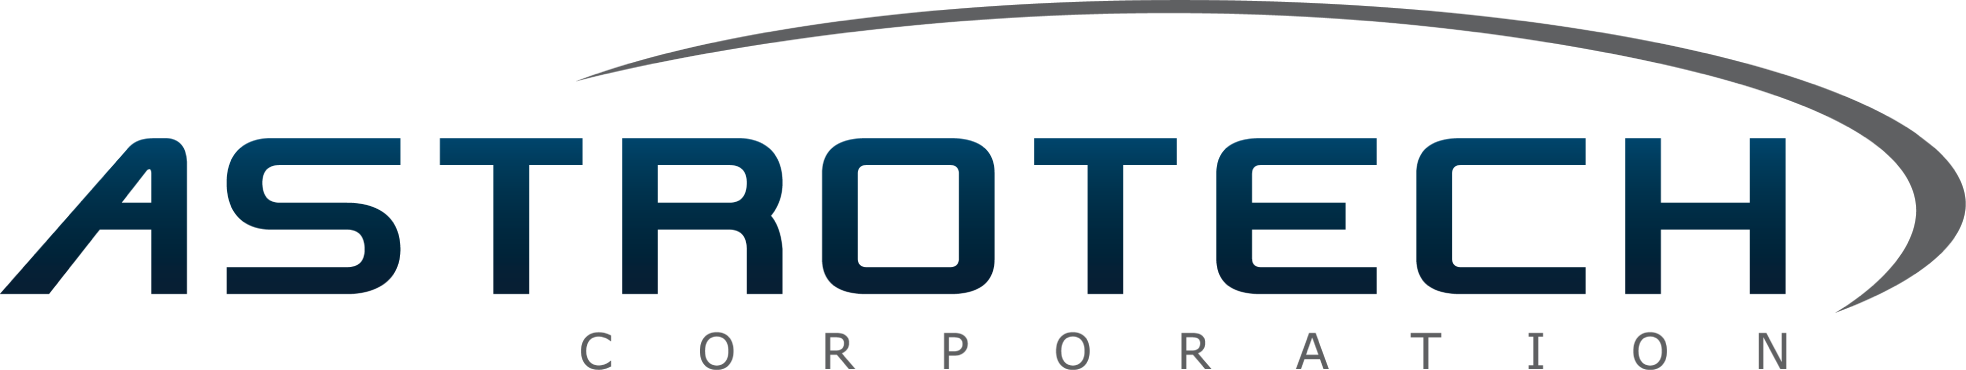 Astrotech logo large (transparent PNG)